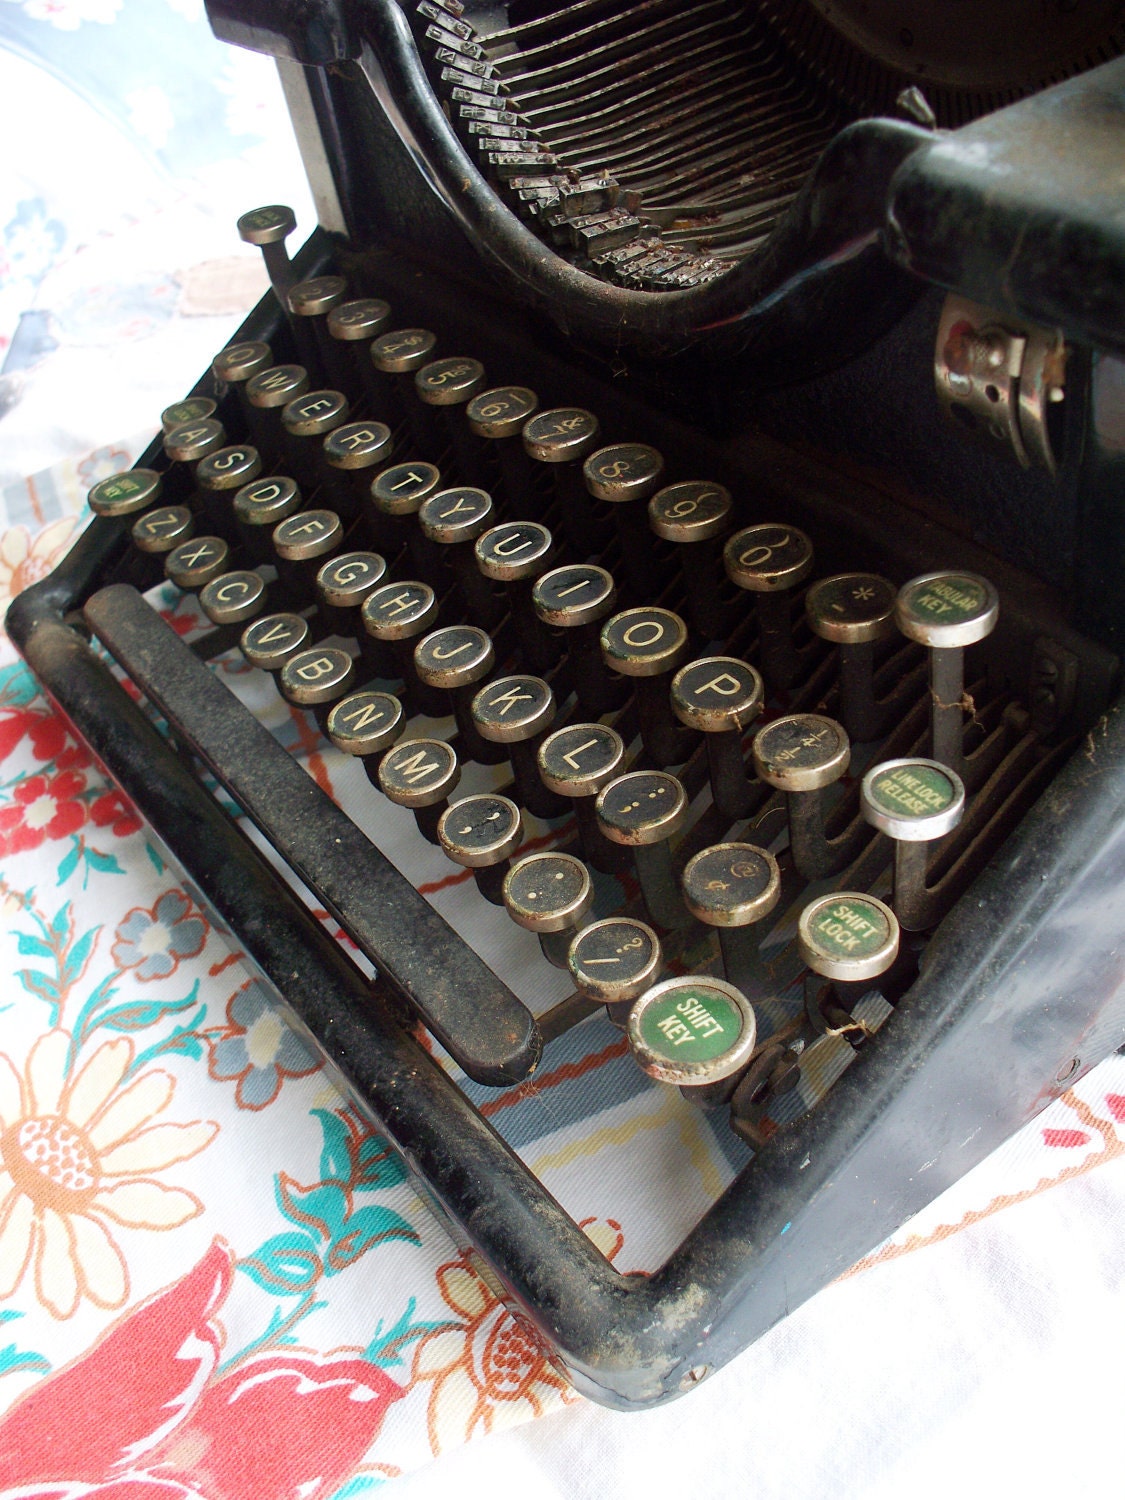 Vintage typewriter Woodstock - great boutique or wedding decoration